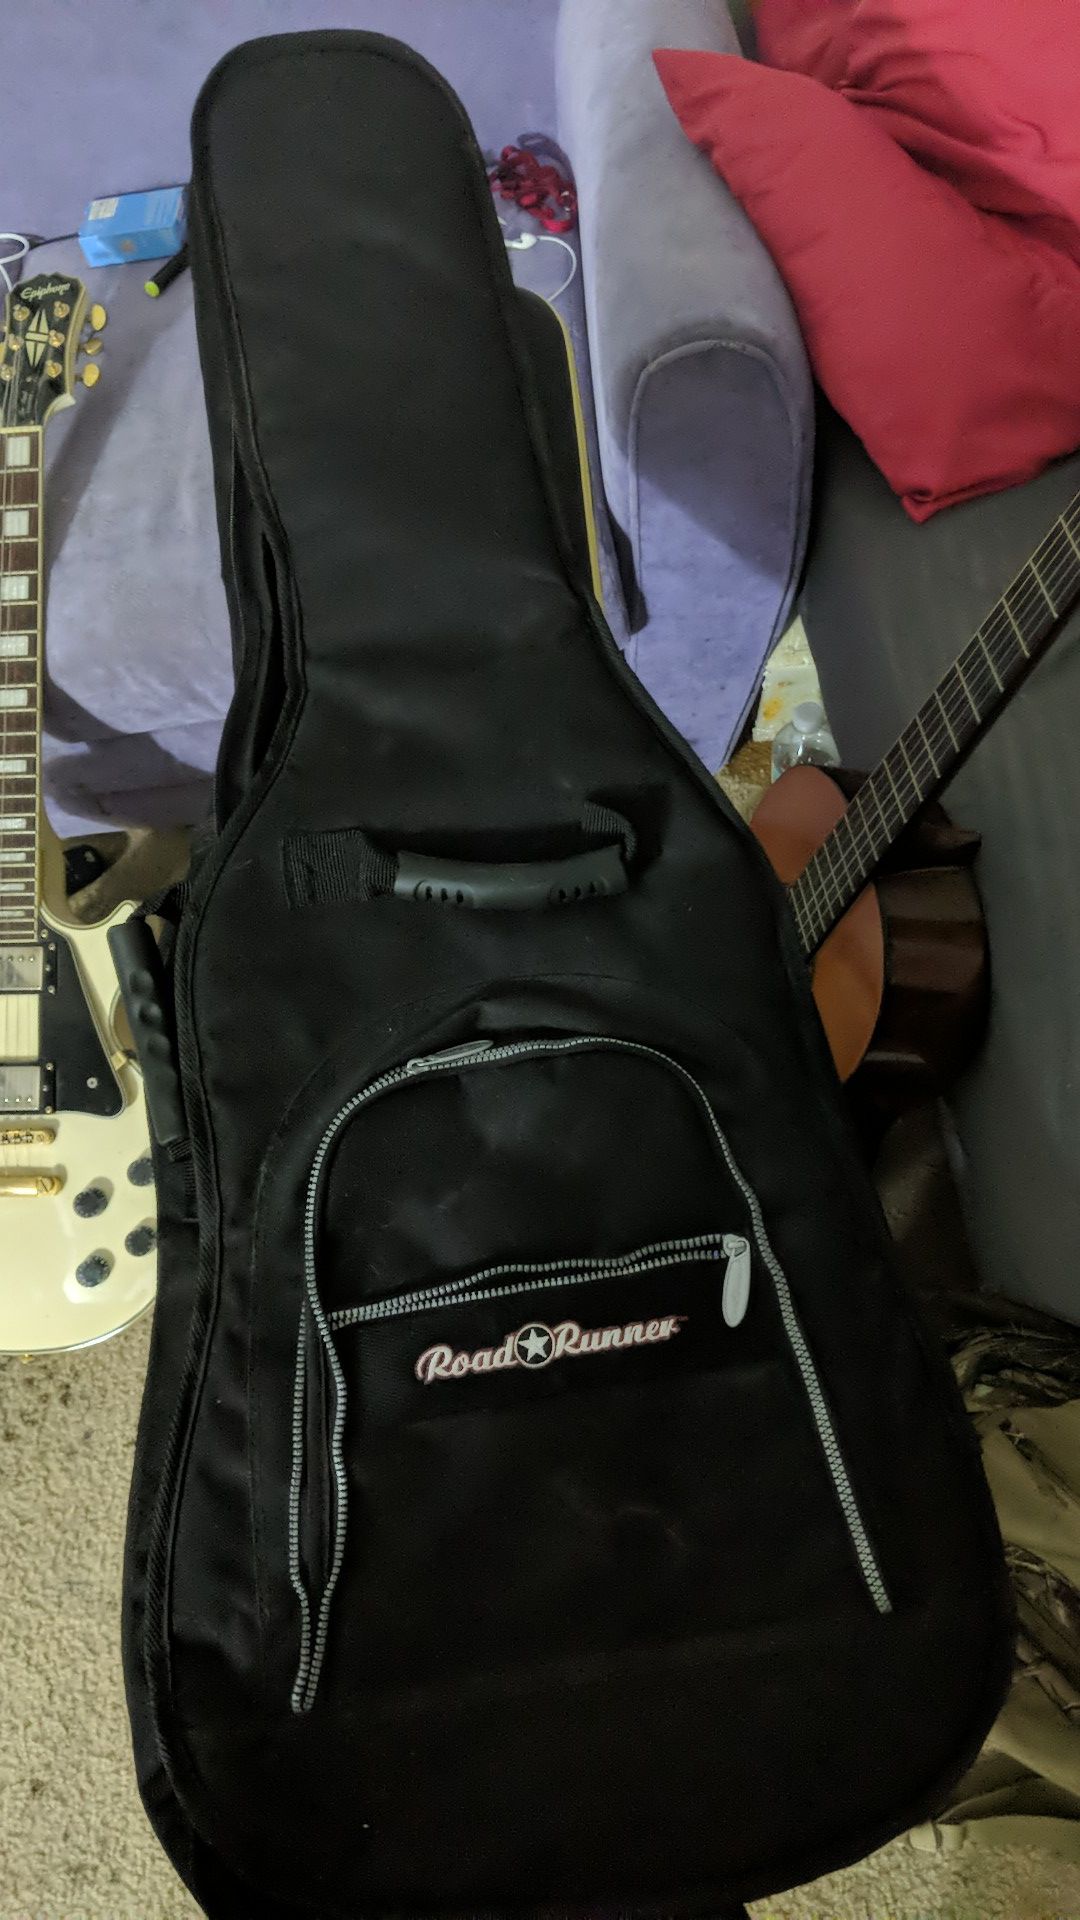 Guitar traveling case